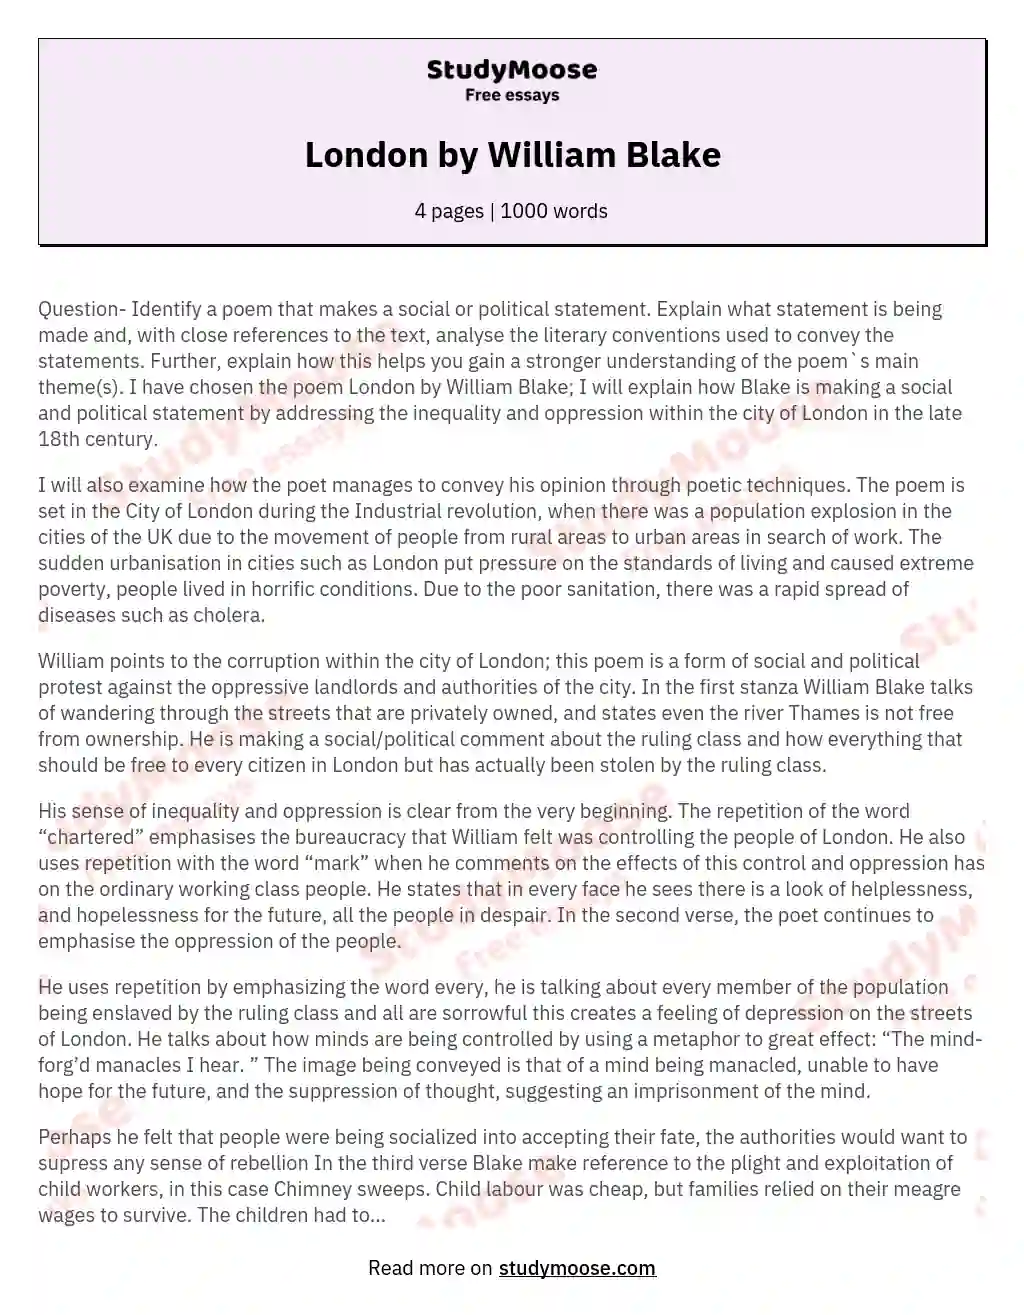 London by William Blake essay